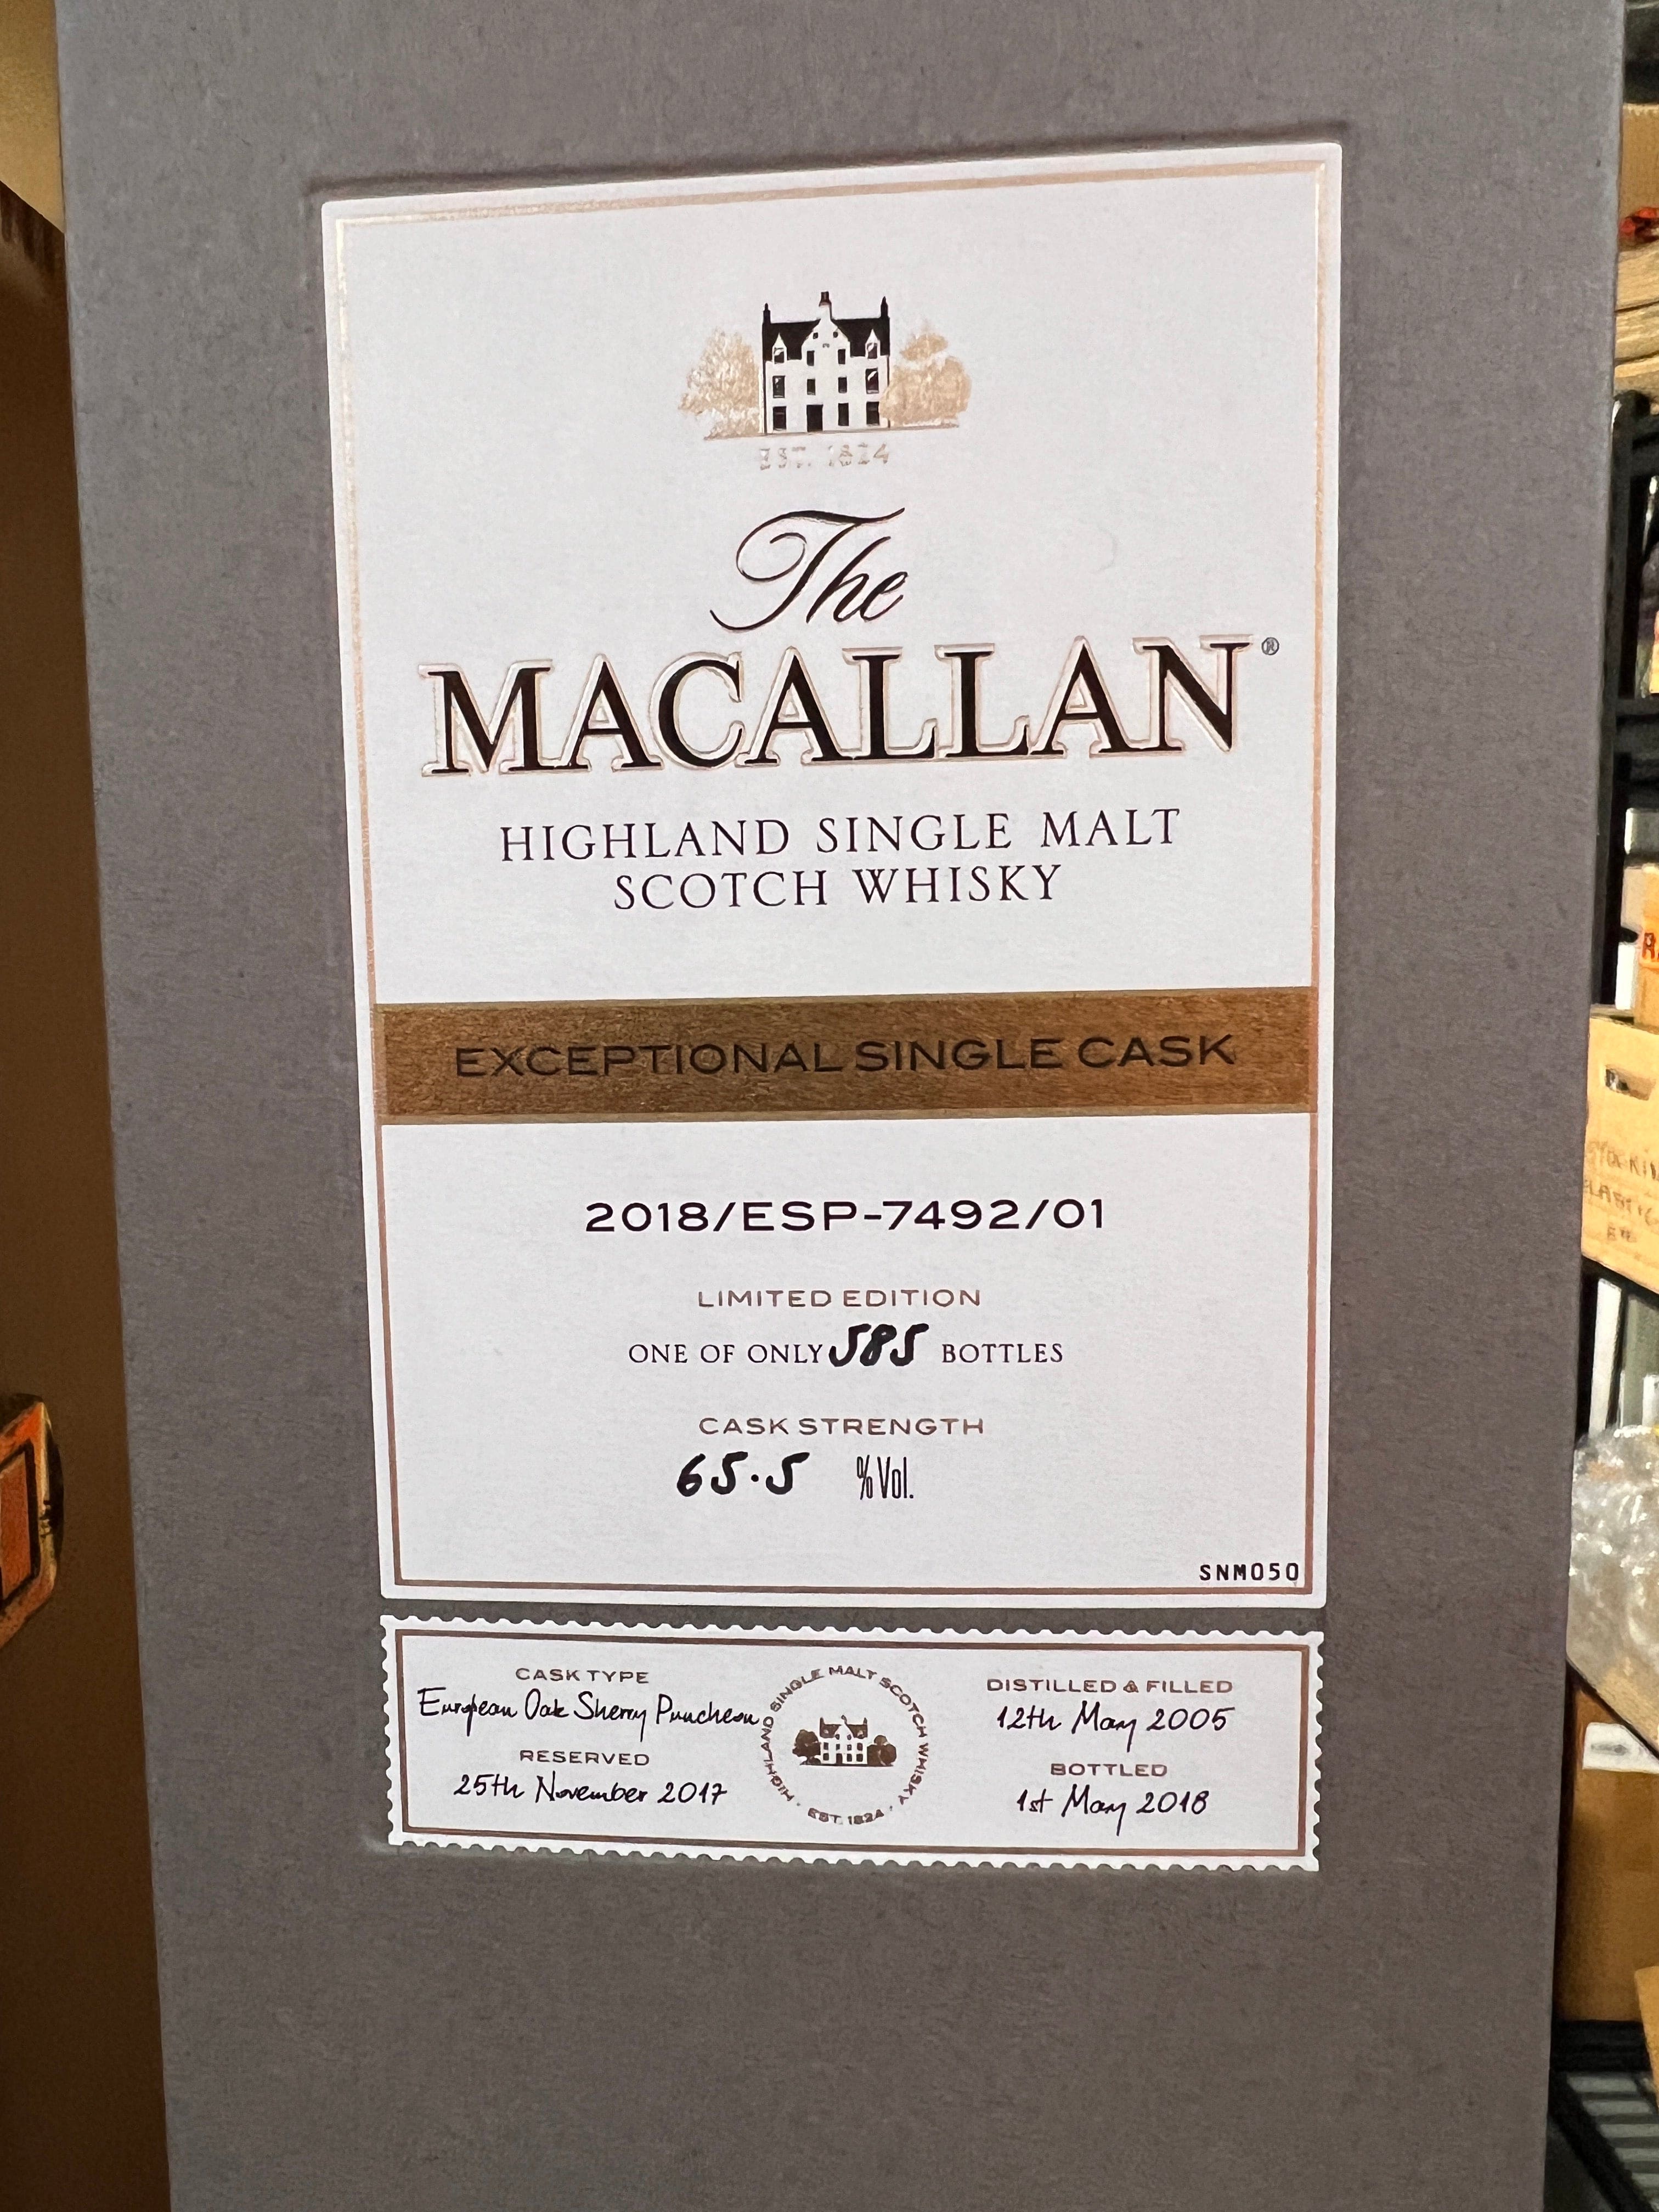 The Macallan Exceptional Single Cask 2018/ESP-7492/01 Single Malt Scotch Whisky 65.5% ABV